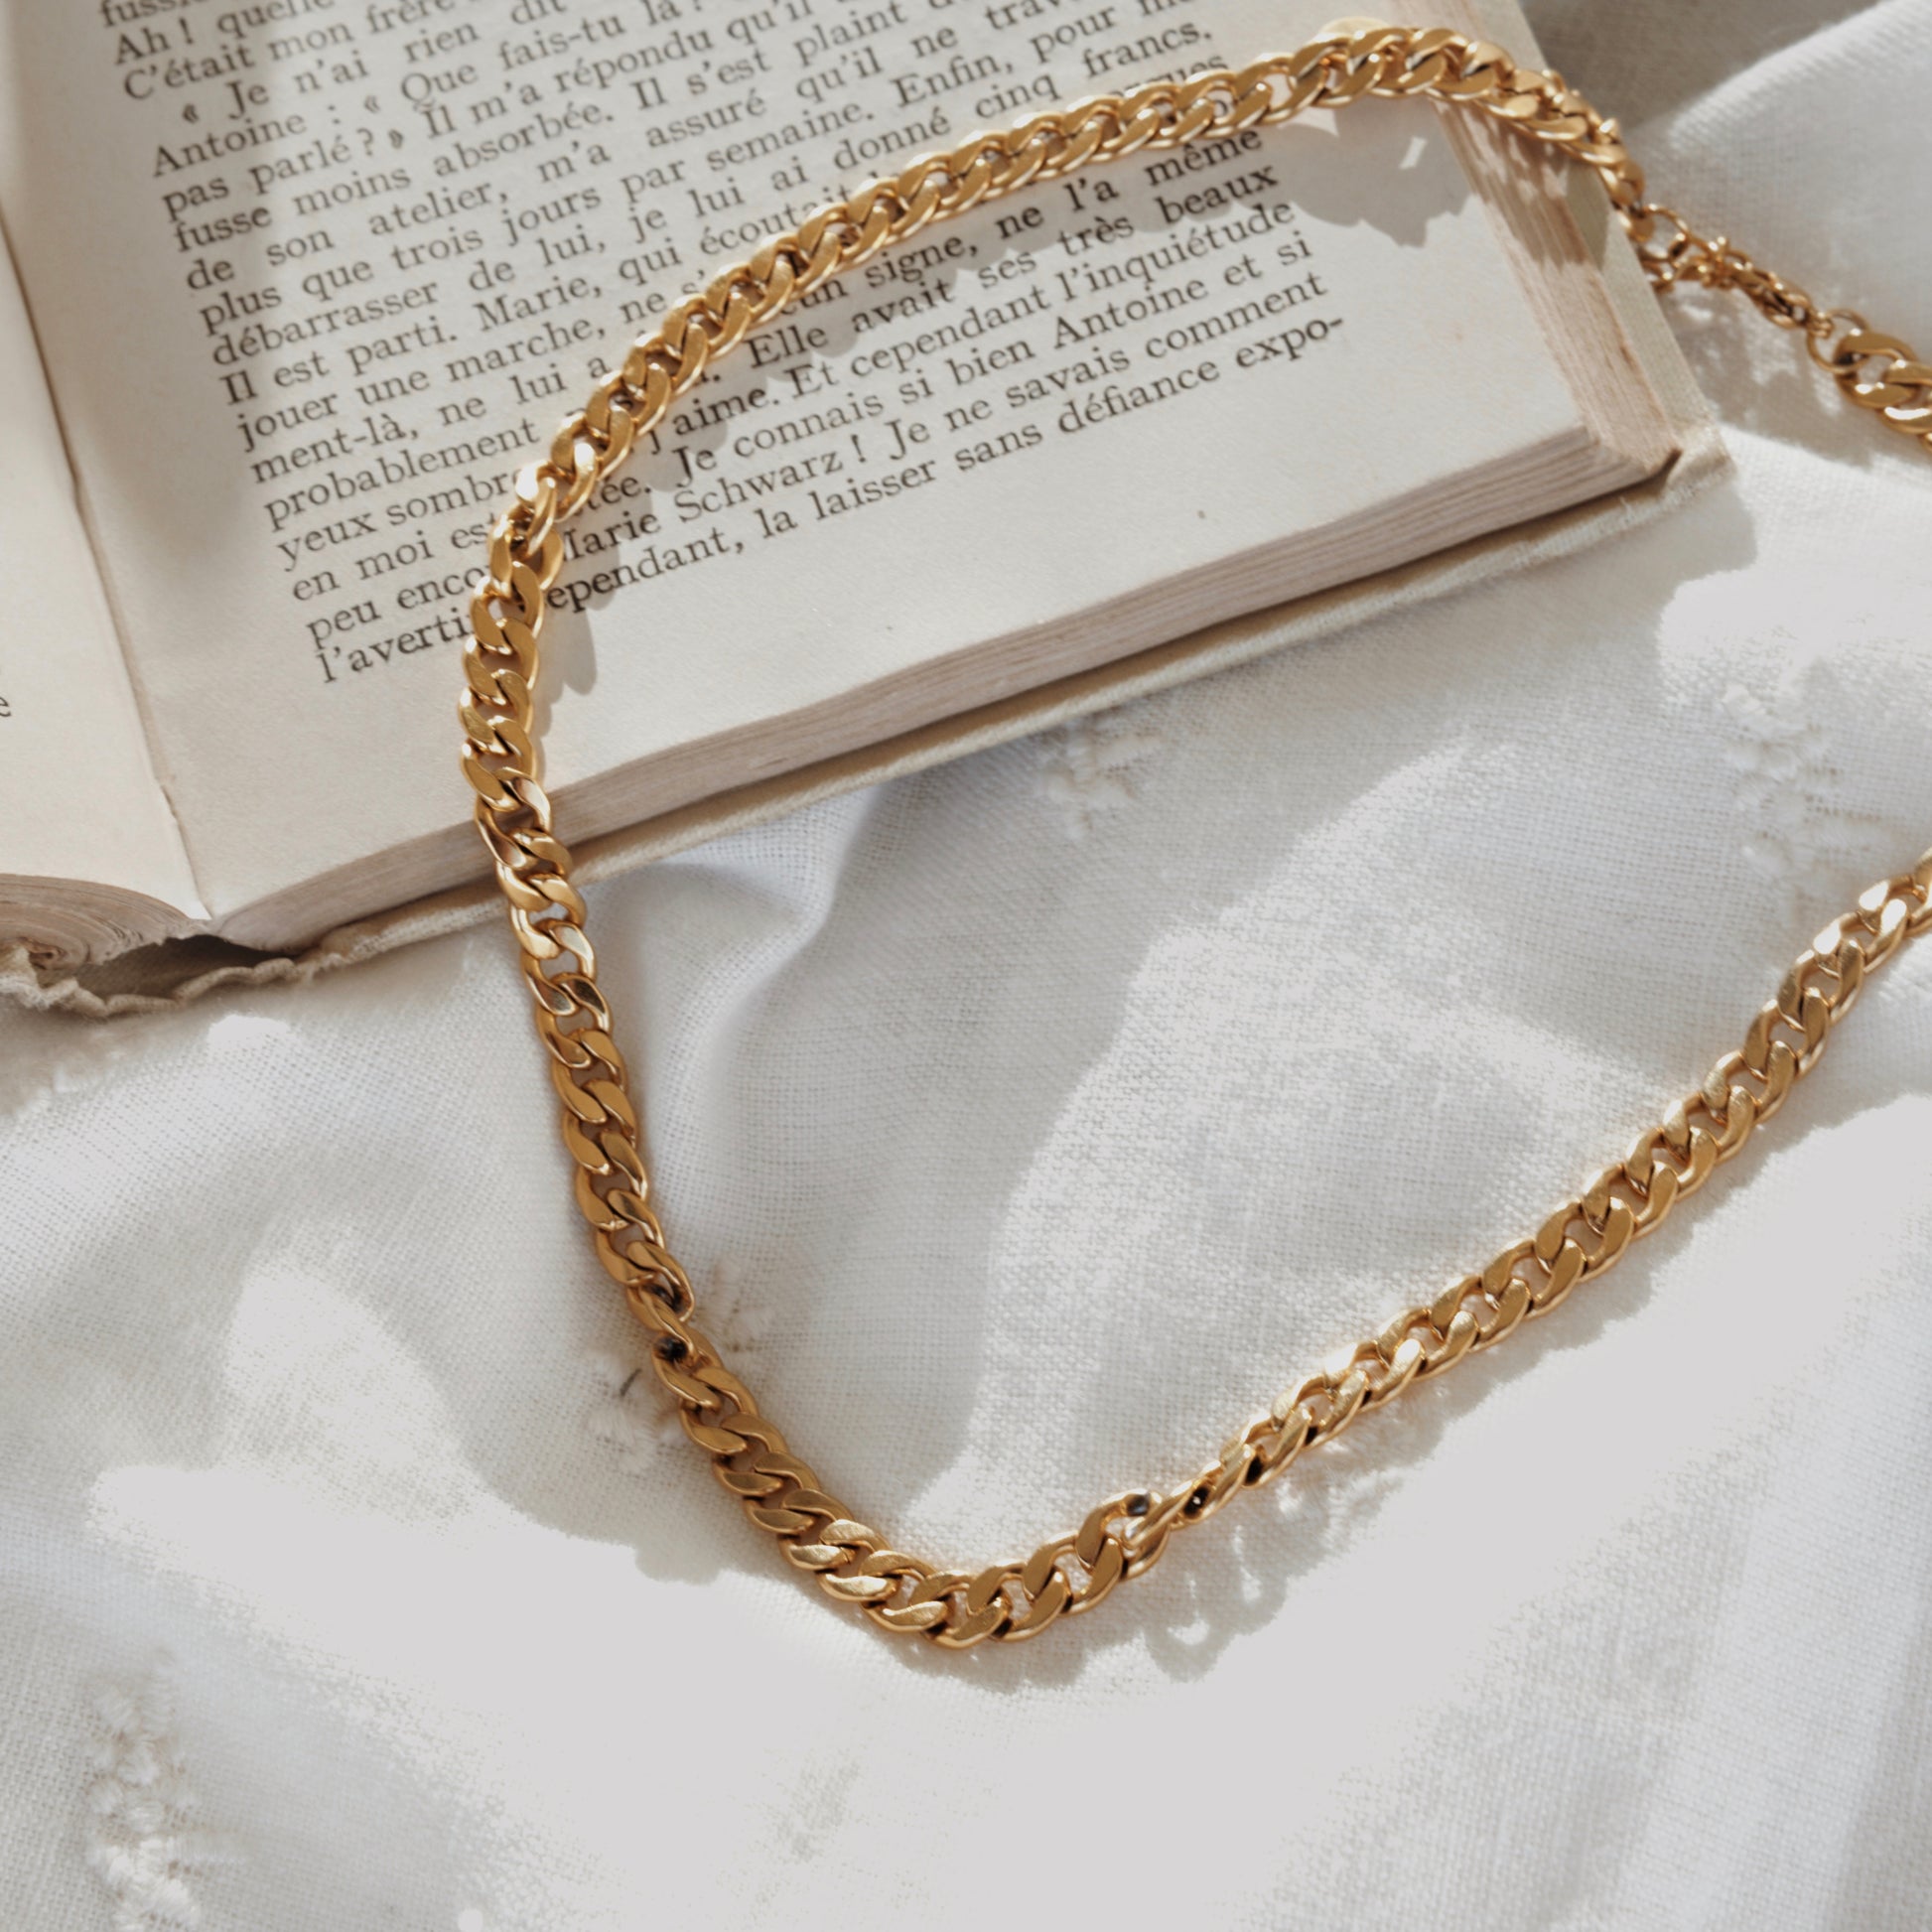 Atalanta Roman Mythology Inspired Necklace Bookish Literature Inspired Jewellery by Avery Faye London UK